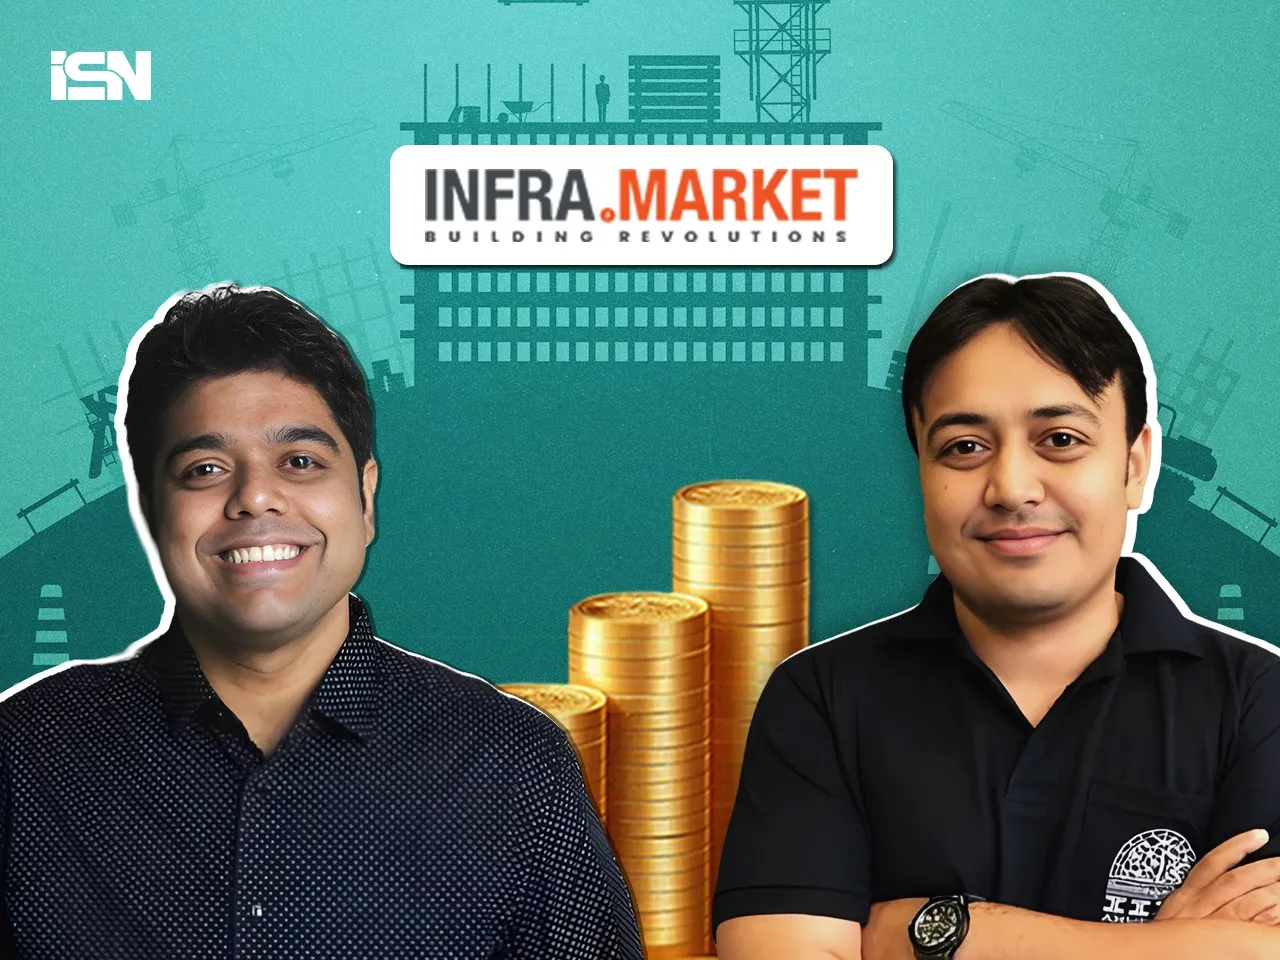 Infra.Market co-founders - Souvik Sengupta and Aaditya Sharda